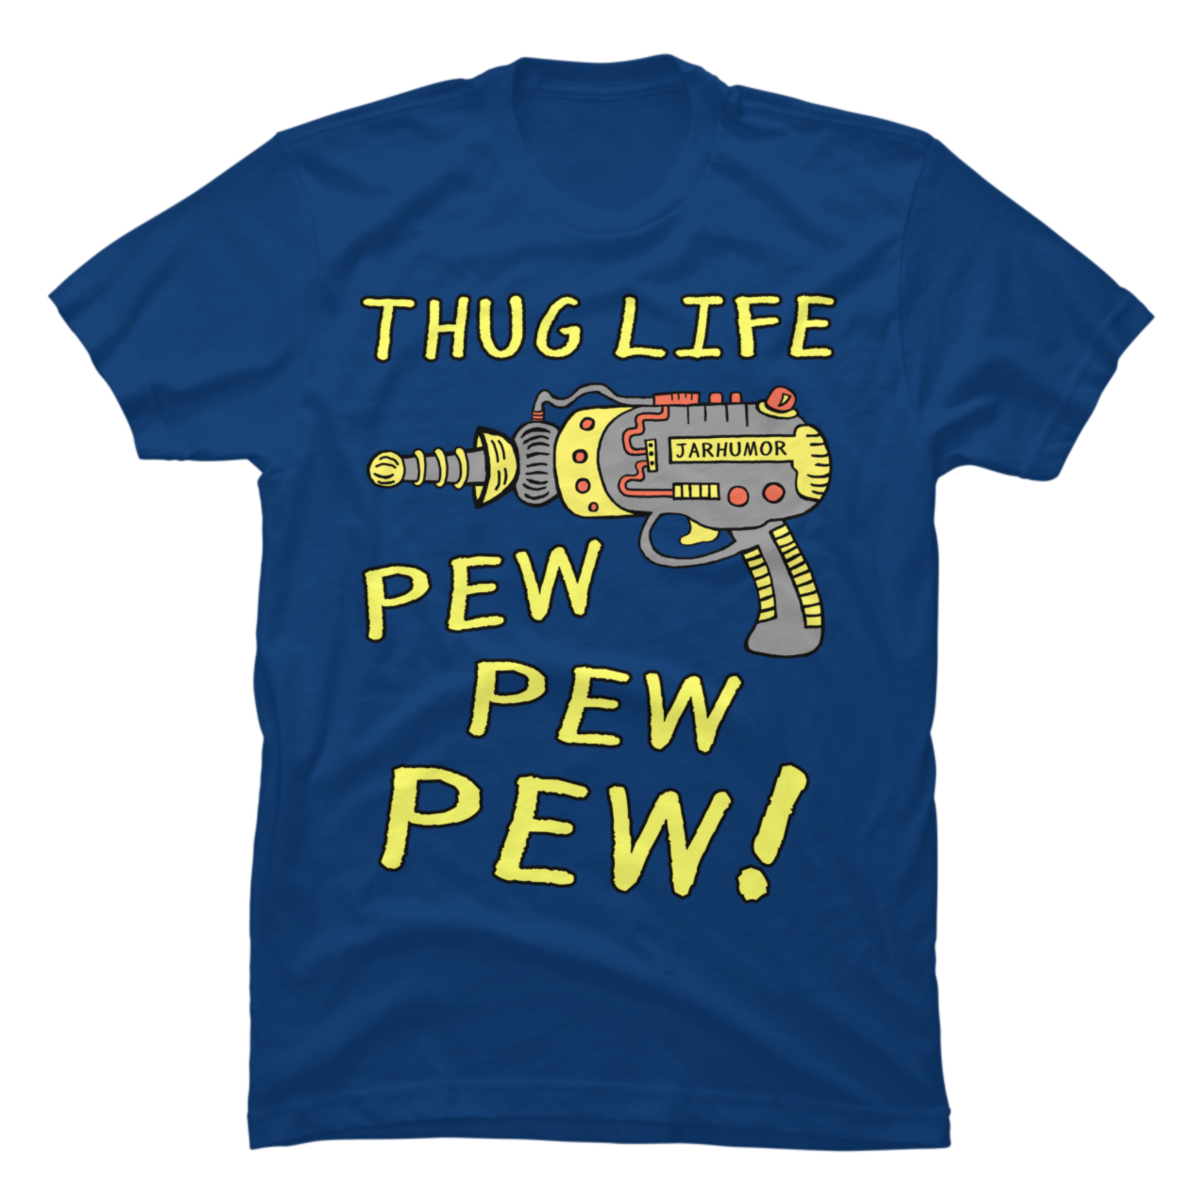 pewpew life shirt